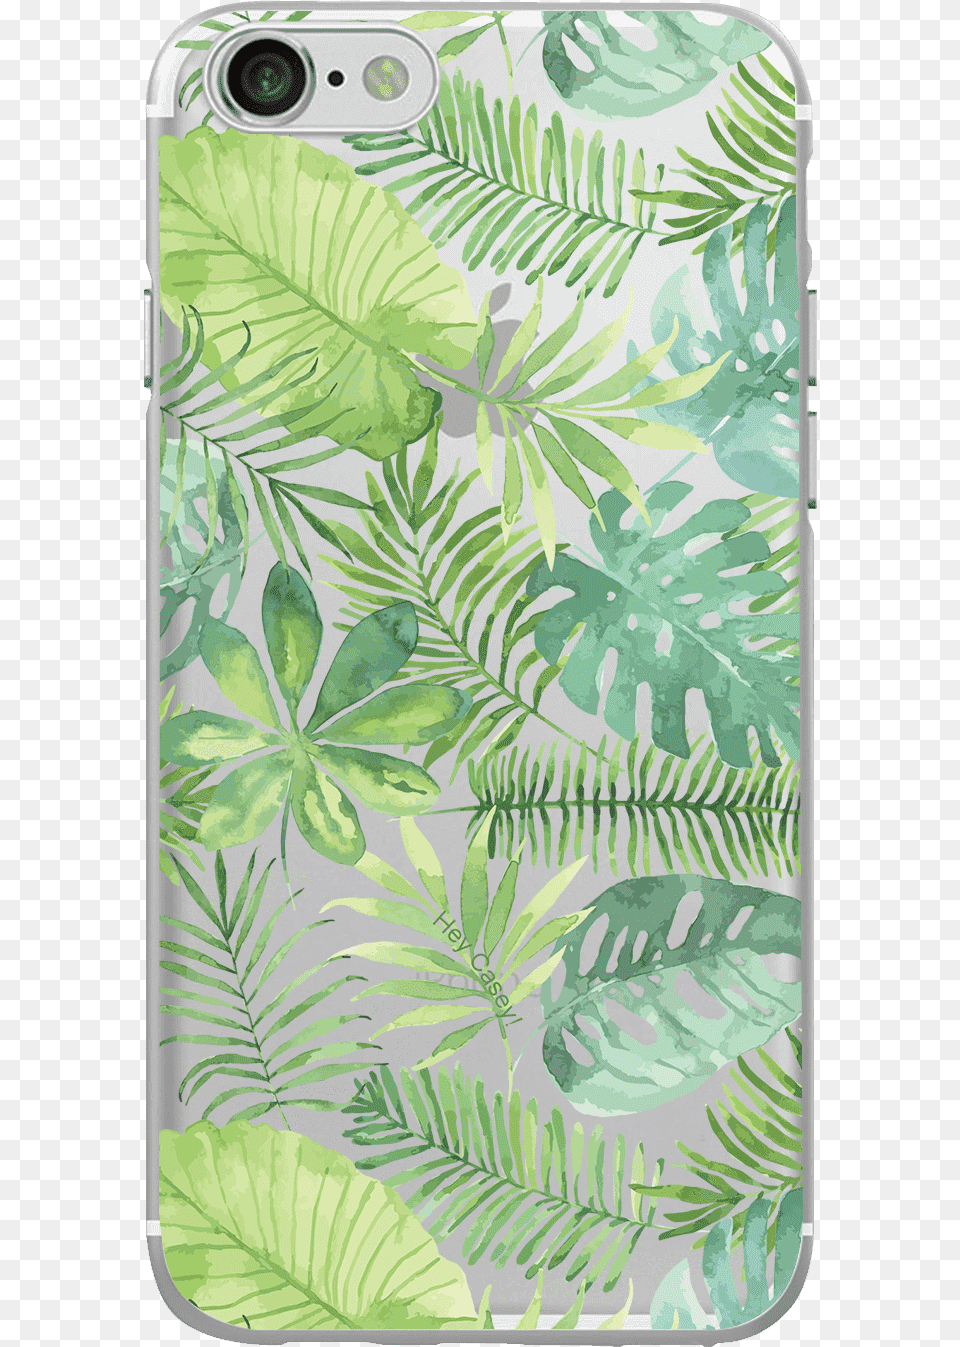 Tropical Leaves Phone Casequotclass Background, Plant, Vegetation, Electronics, Fern Free Transparent Png